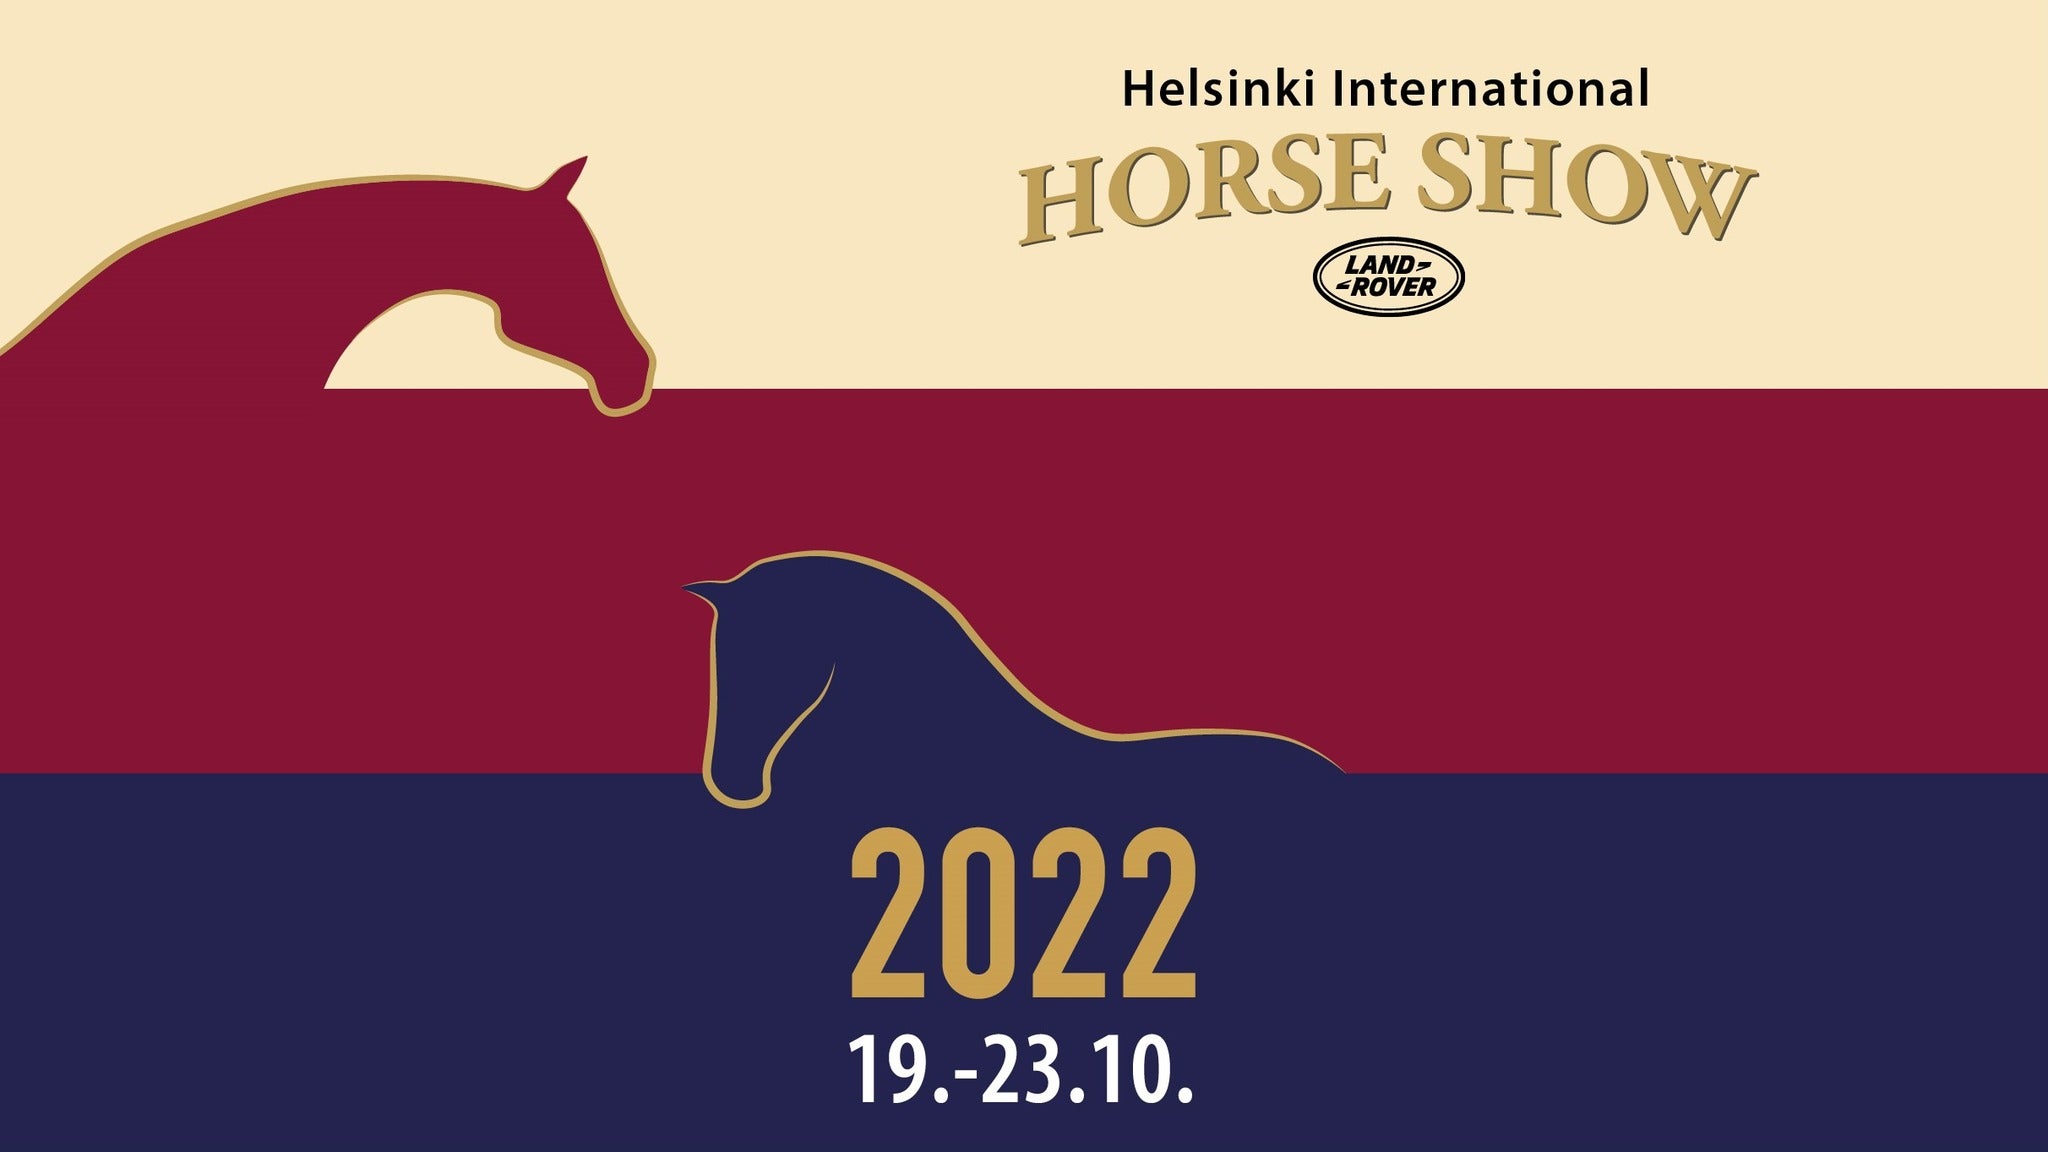 Horse Show 2022: Helsinki Olympic Games 1952 70 year anniversary